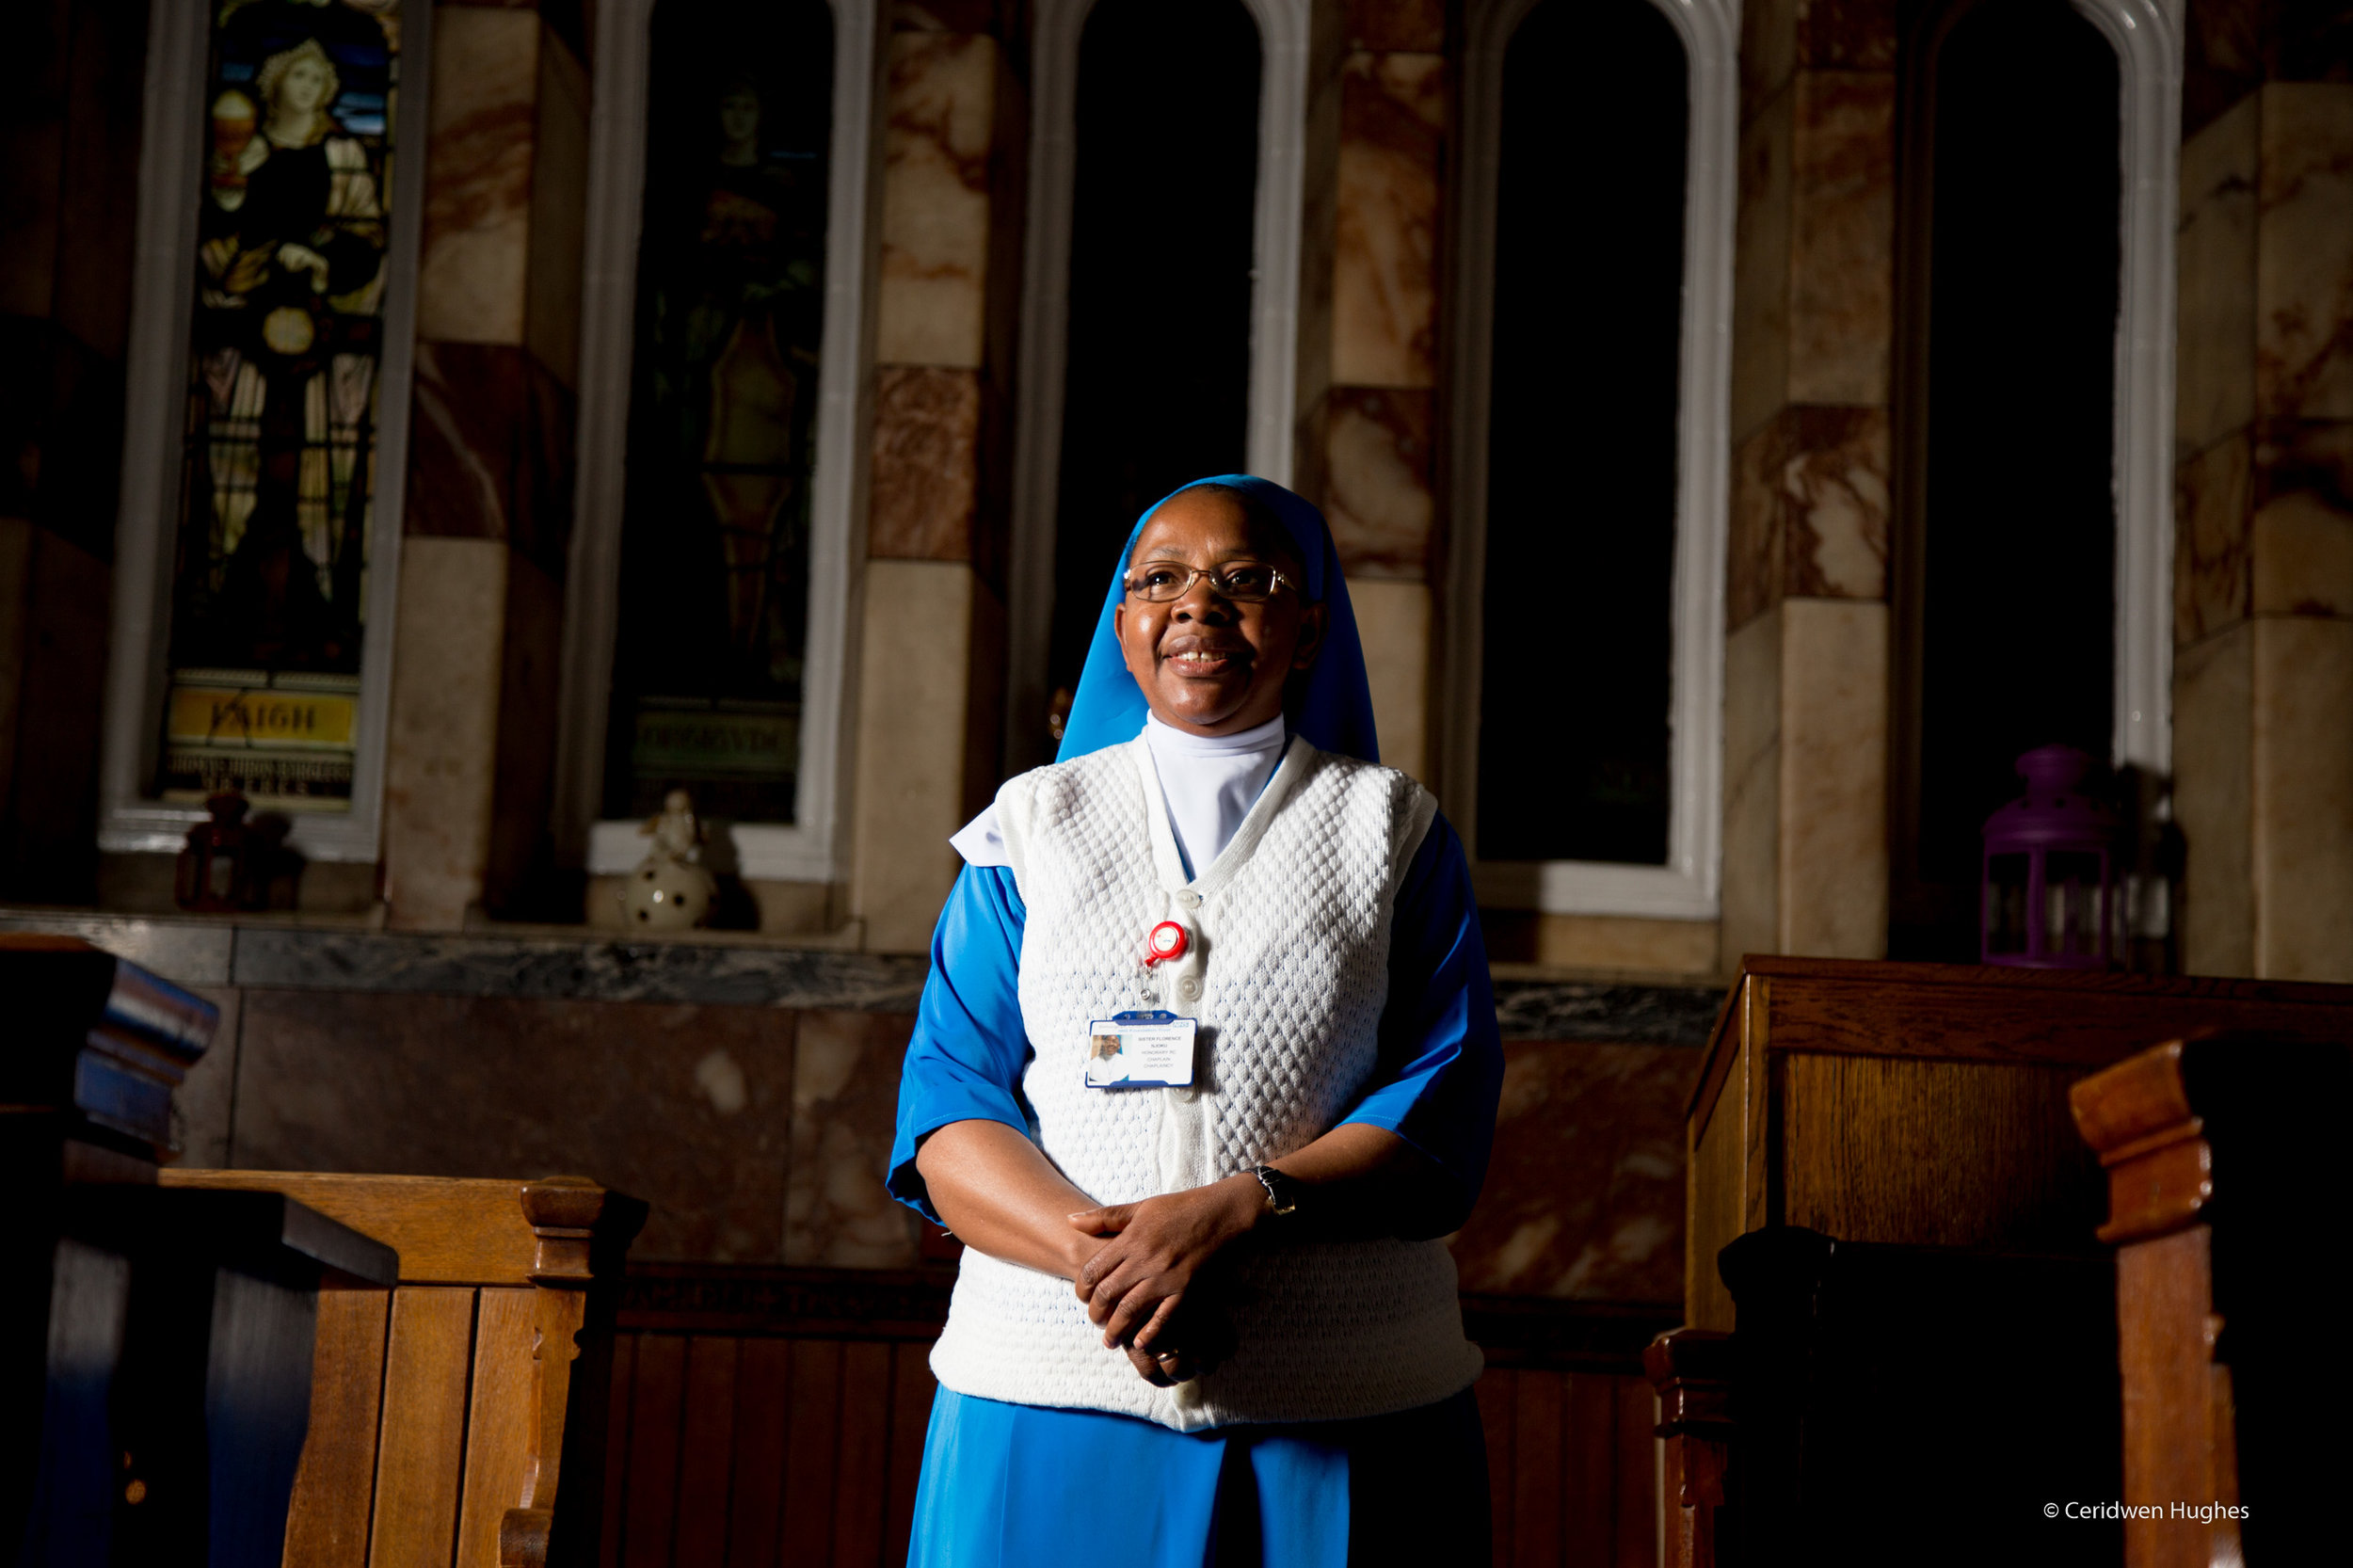 Sister Florence of Birmingham Children's Hospital